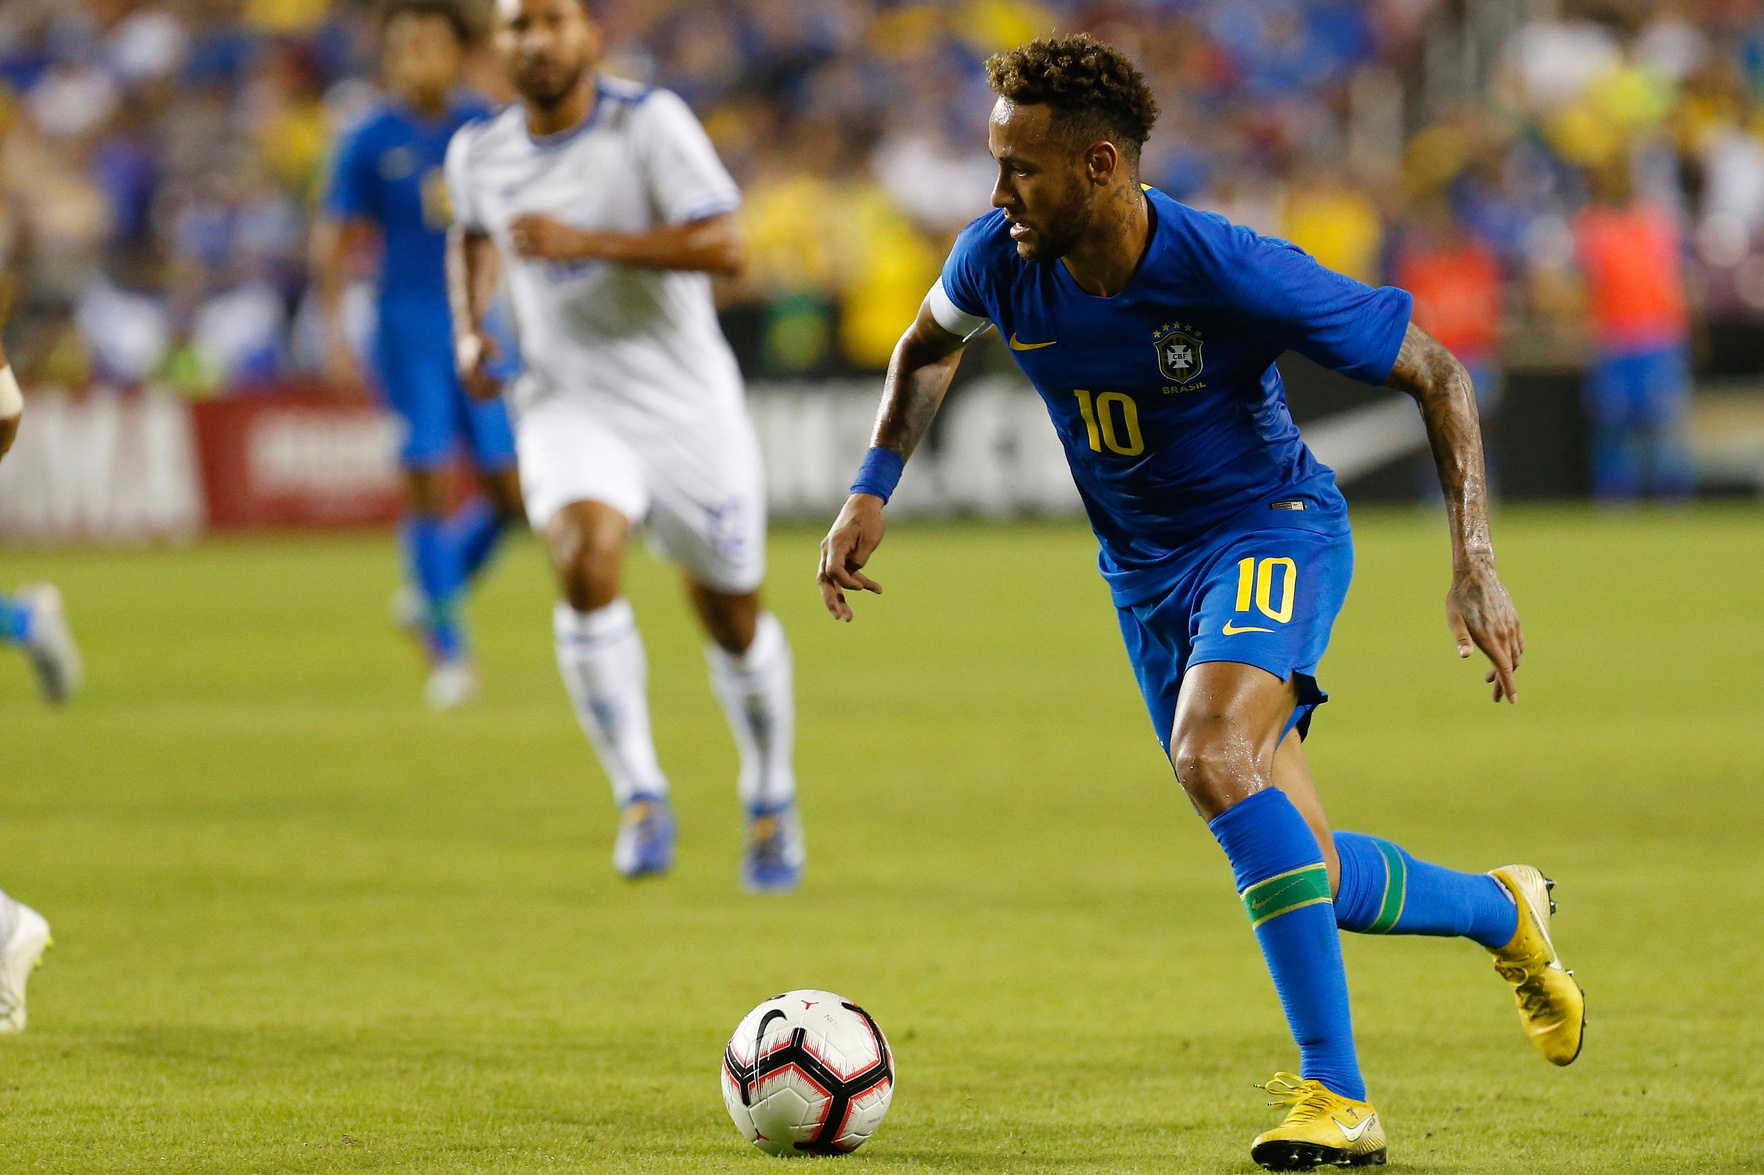 Saudi soccer team Al-Hilal lures Brazilian star Neymar